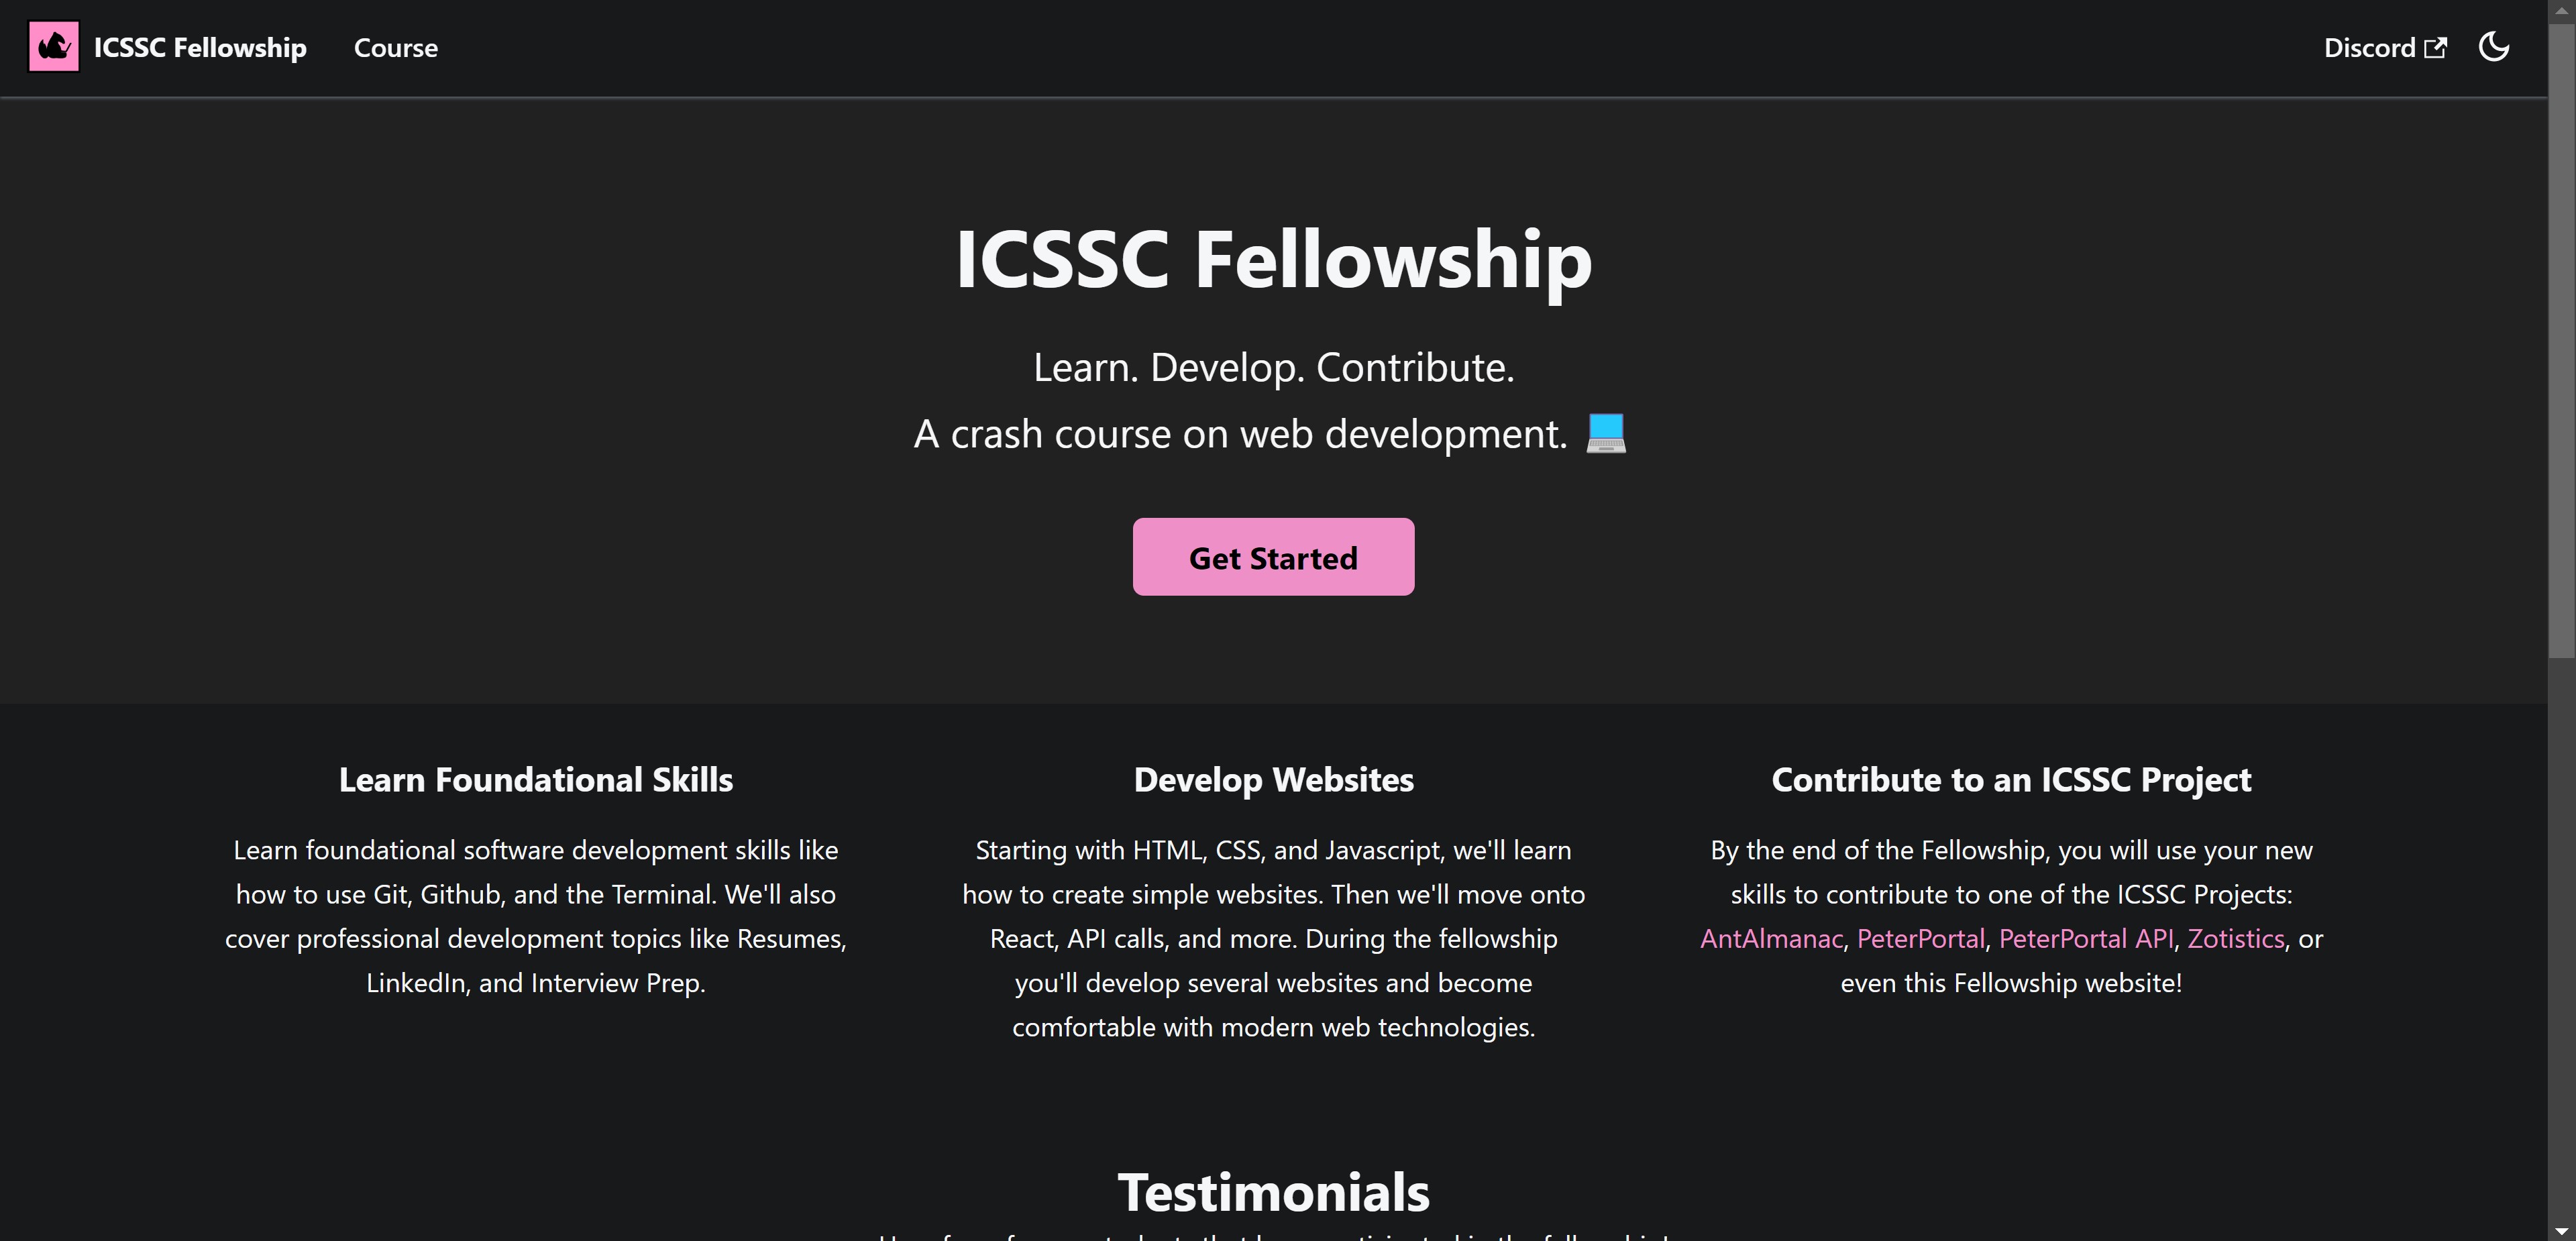 ICSSC Fellowship